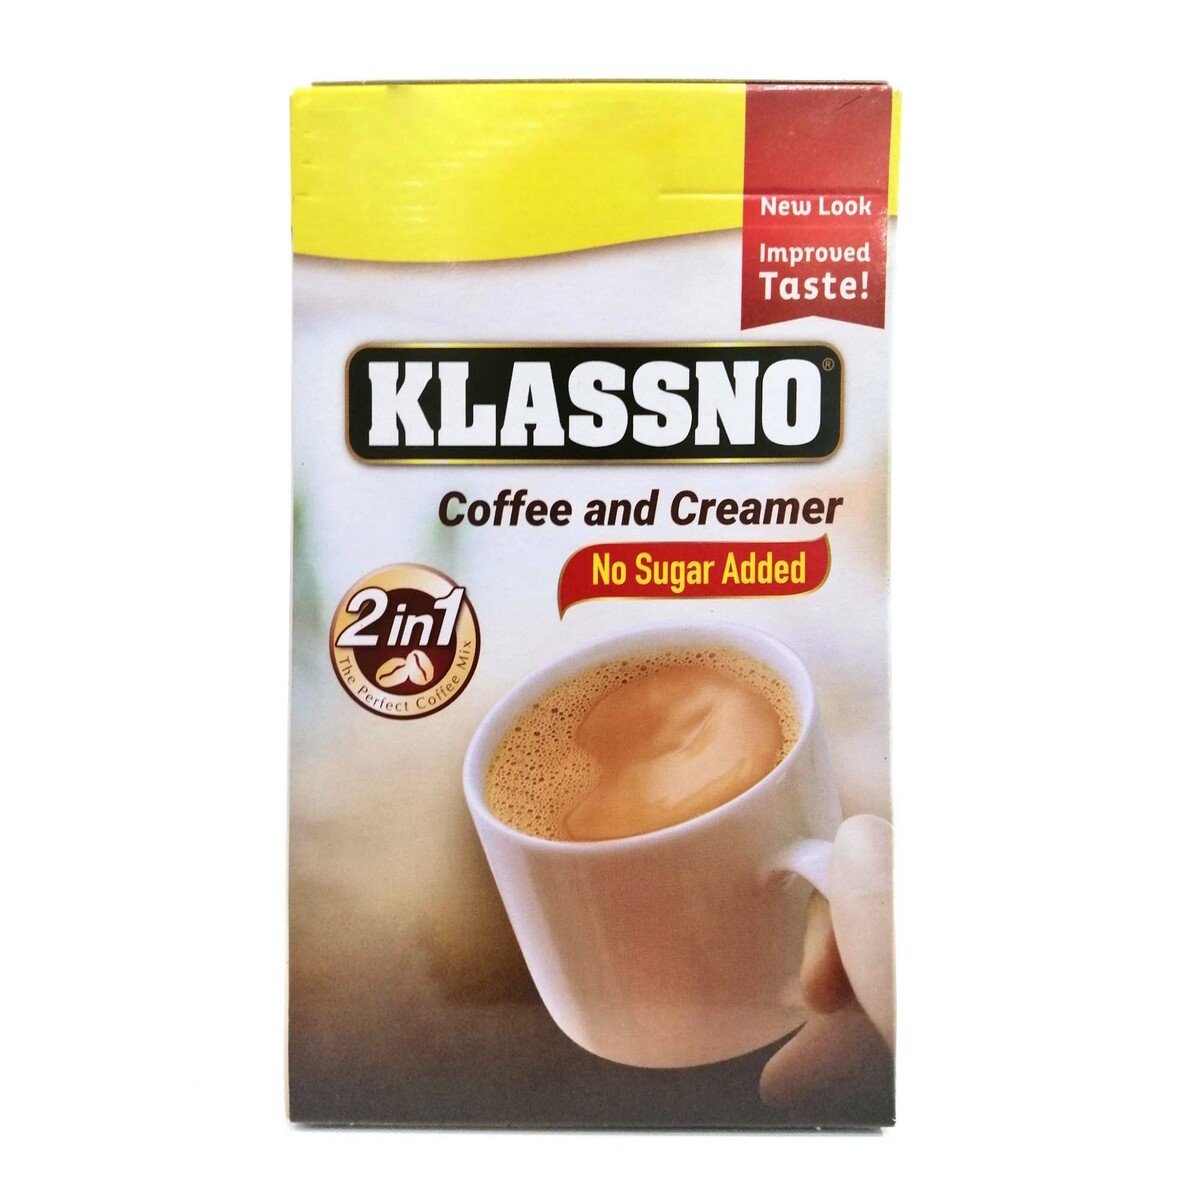 Klassno Coffee and Creamer 10 x 12g